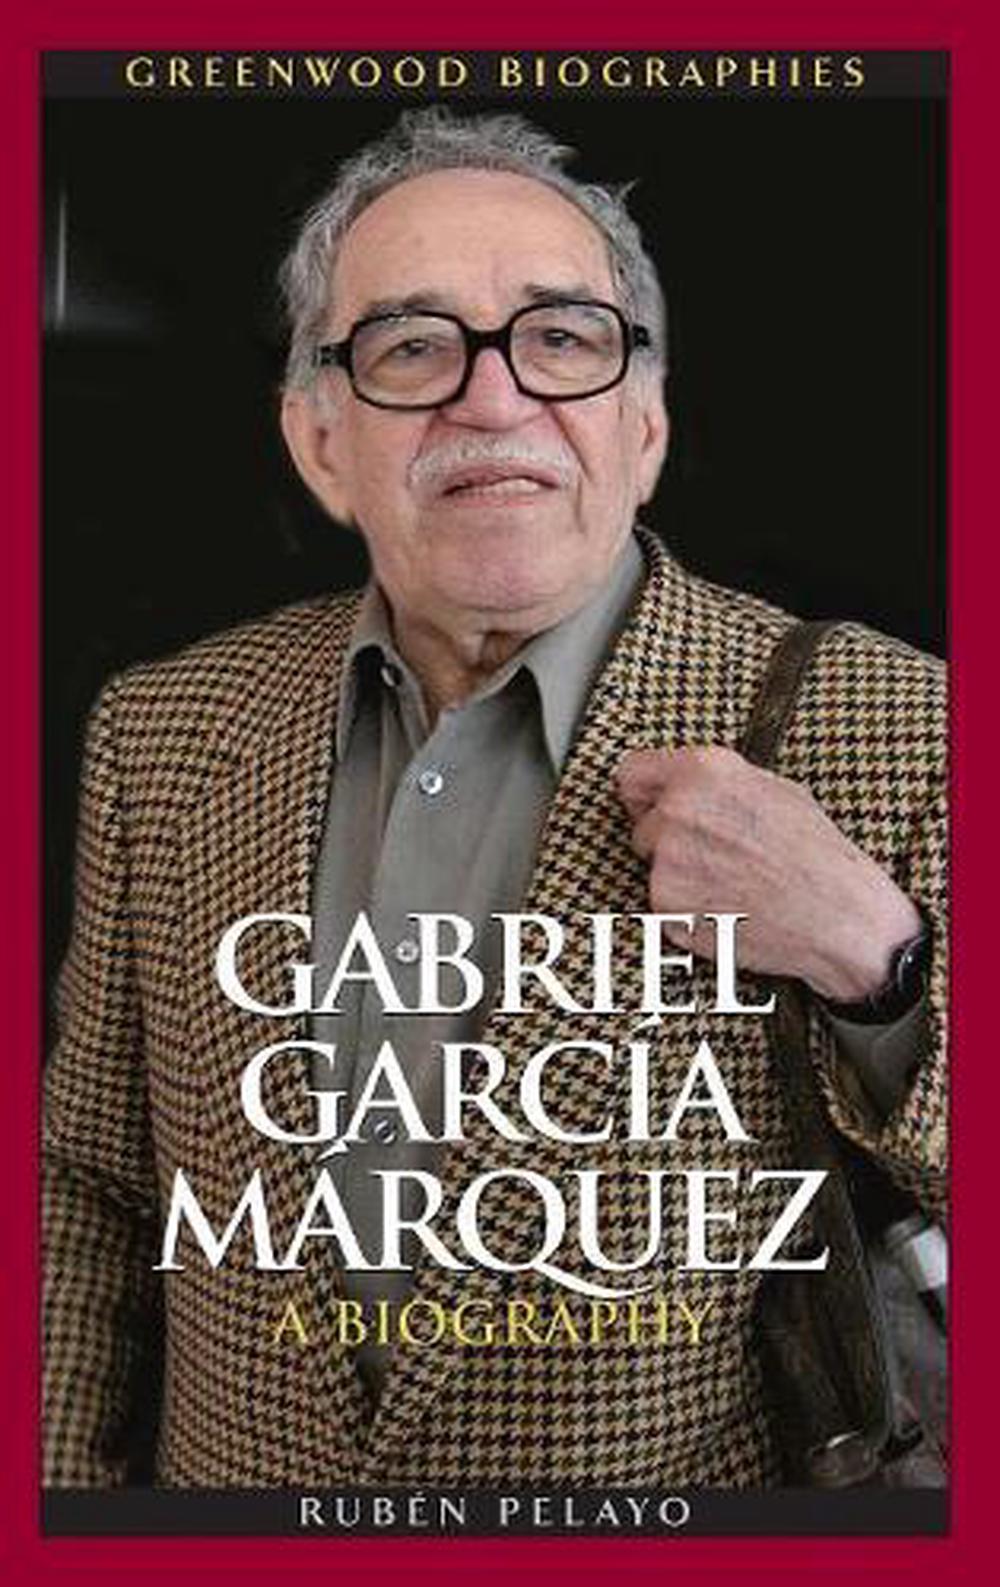 who is gabriel garcia marquez biography